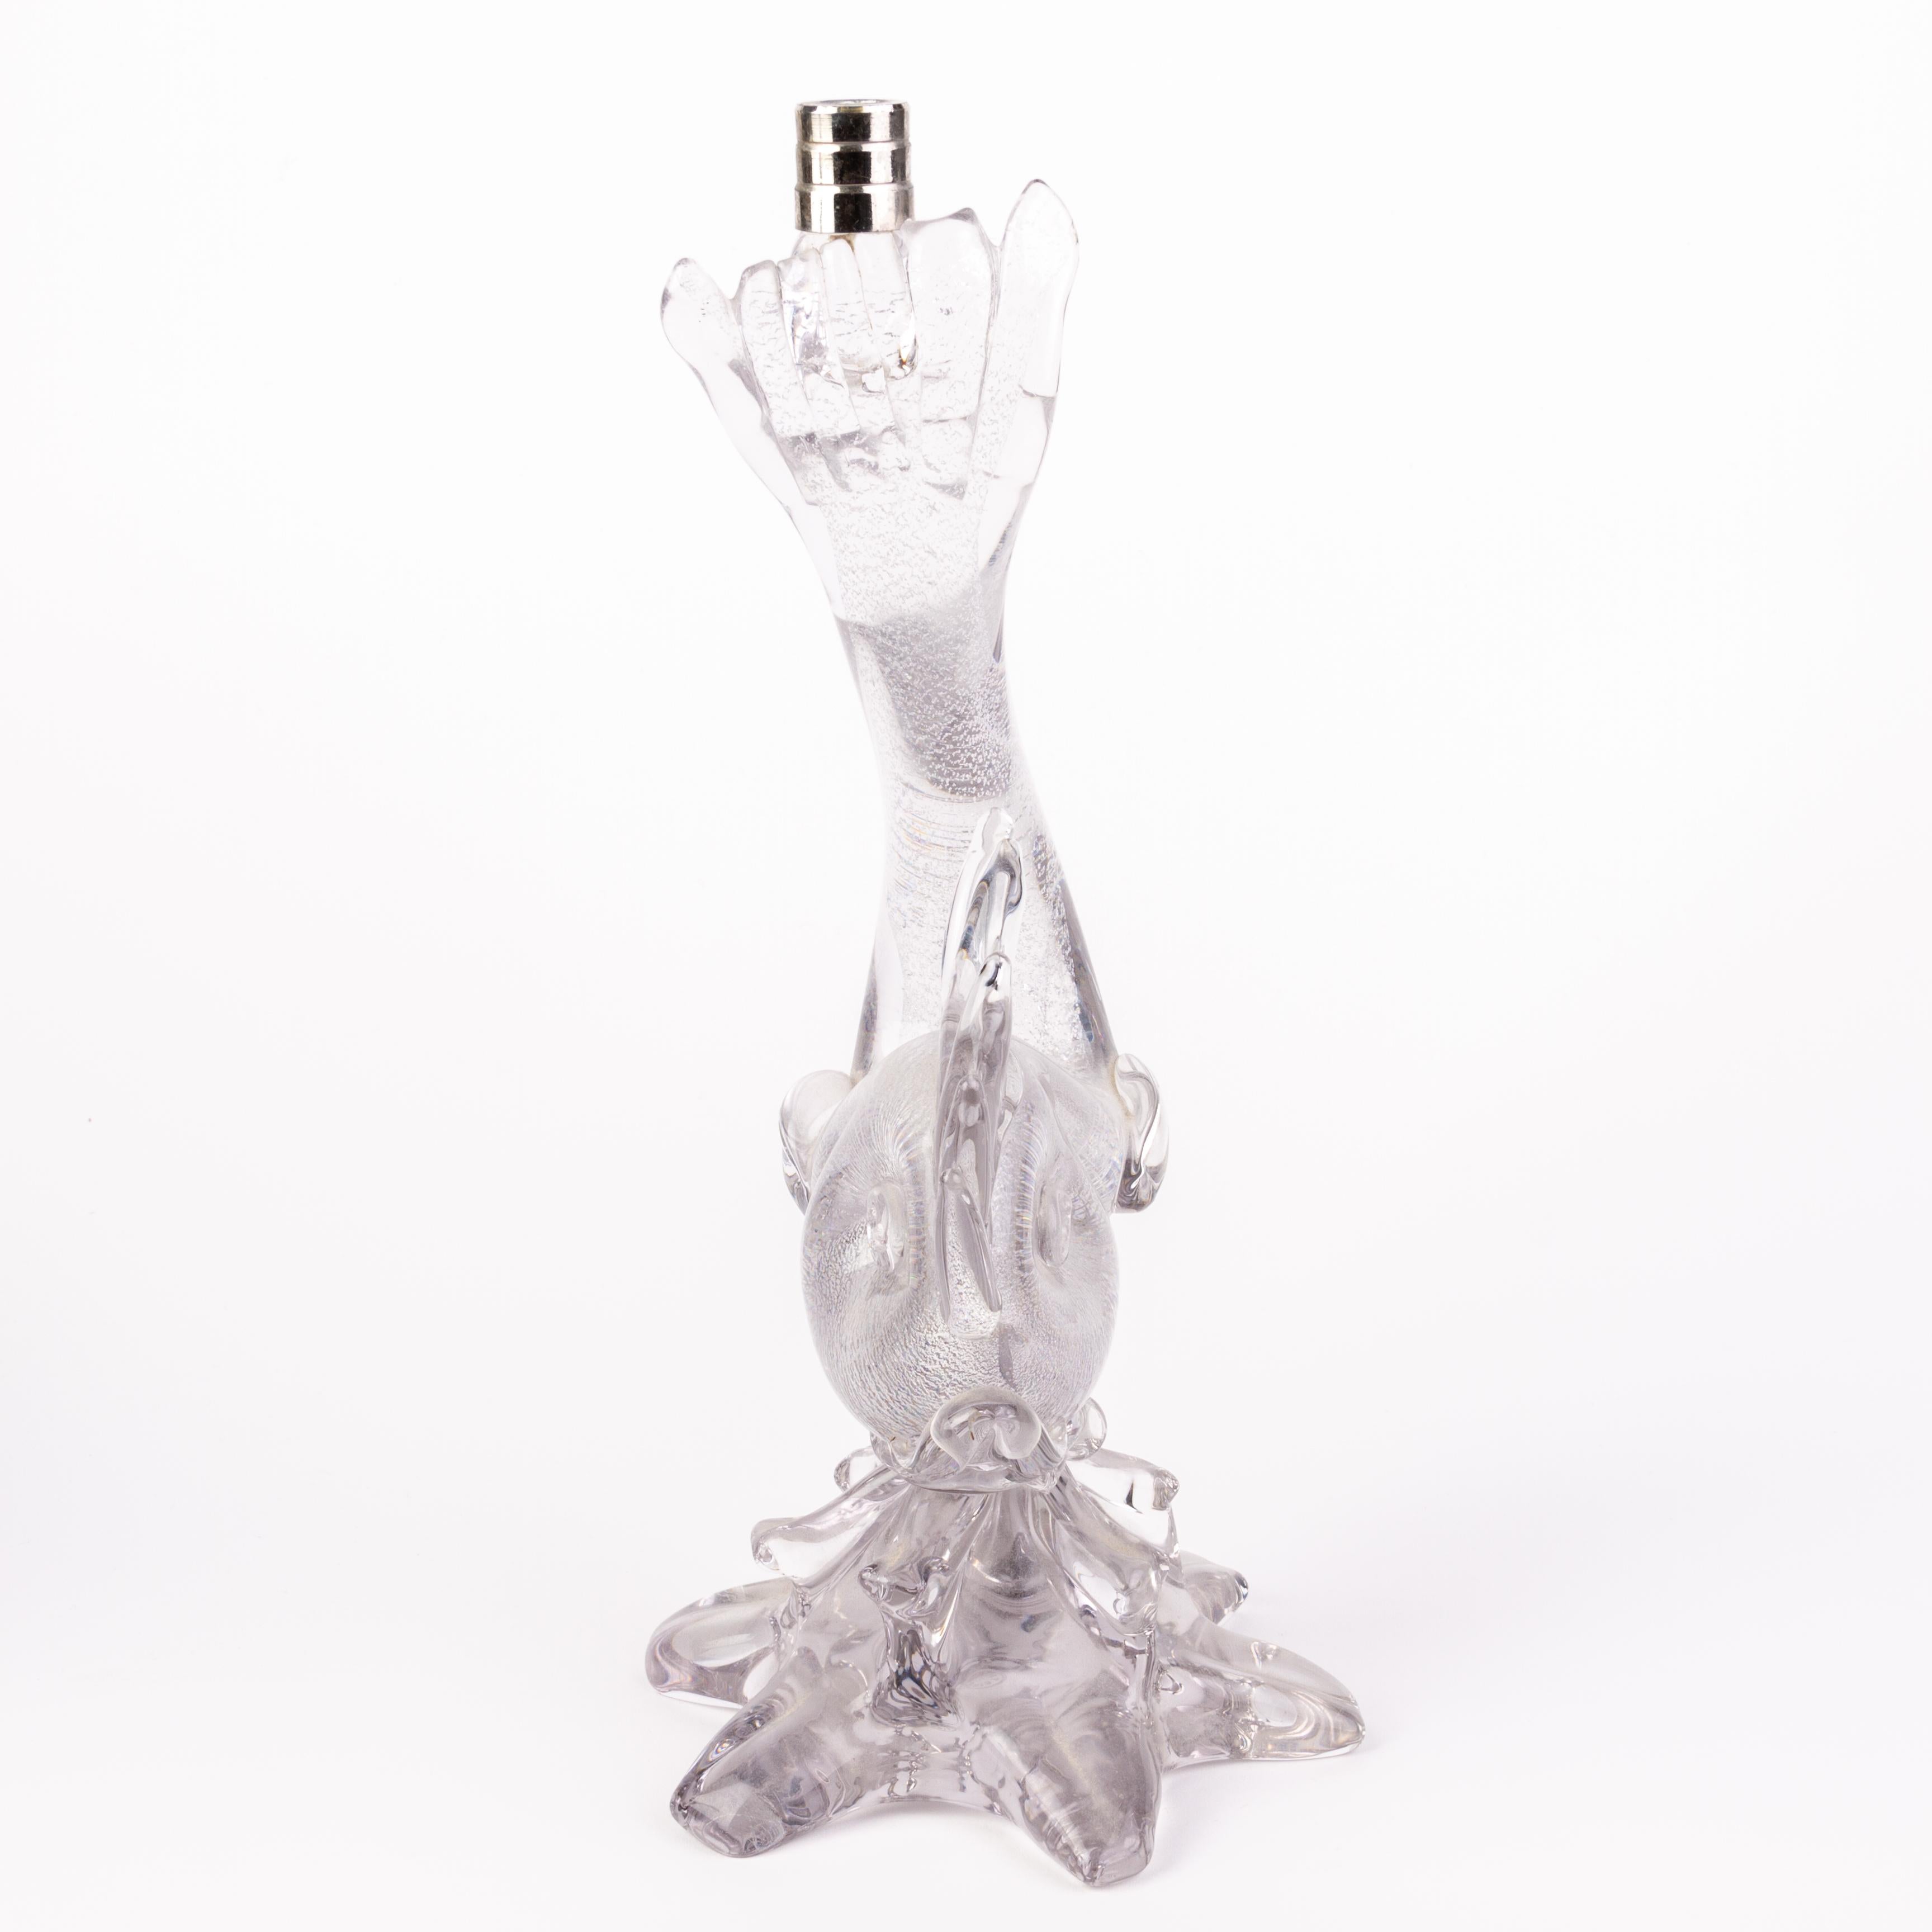 Murano Venetian Glass Sculpture Fish Lamp Base
Good condition
Free international shipping.